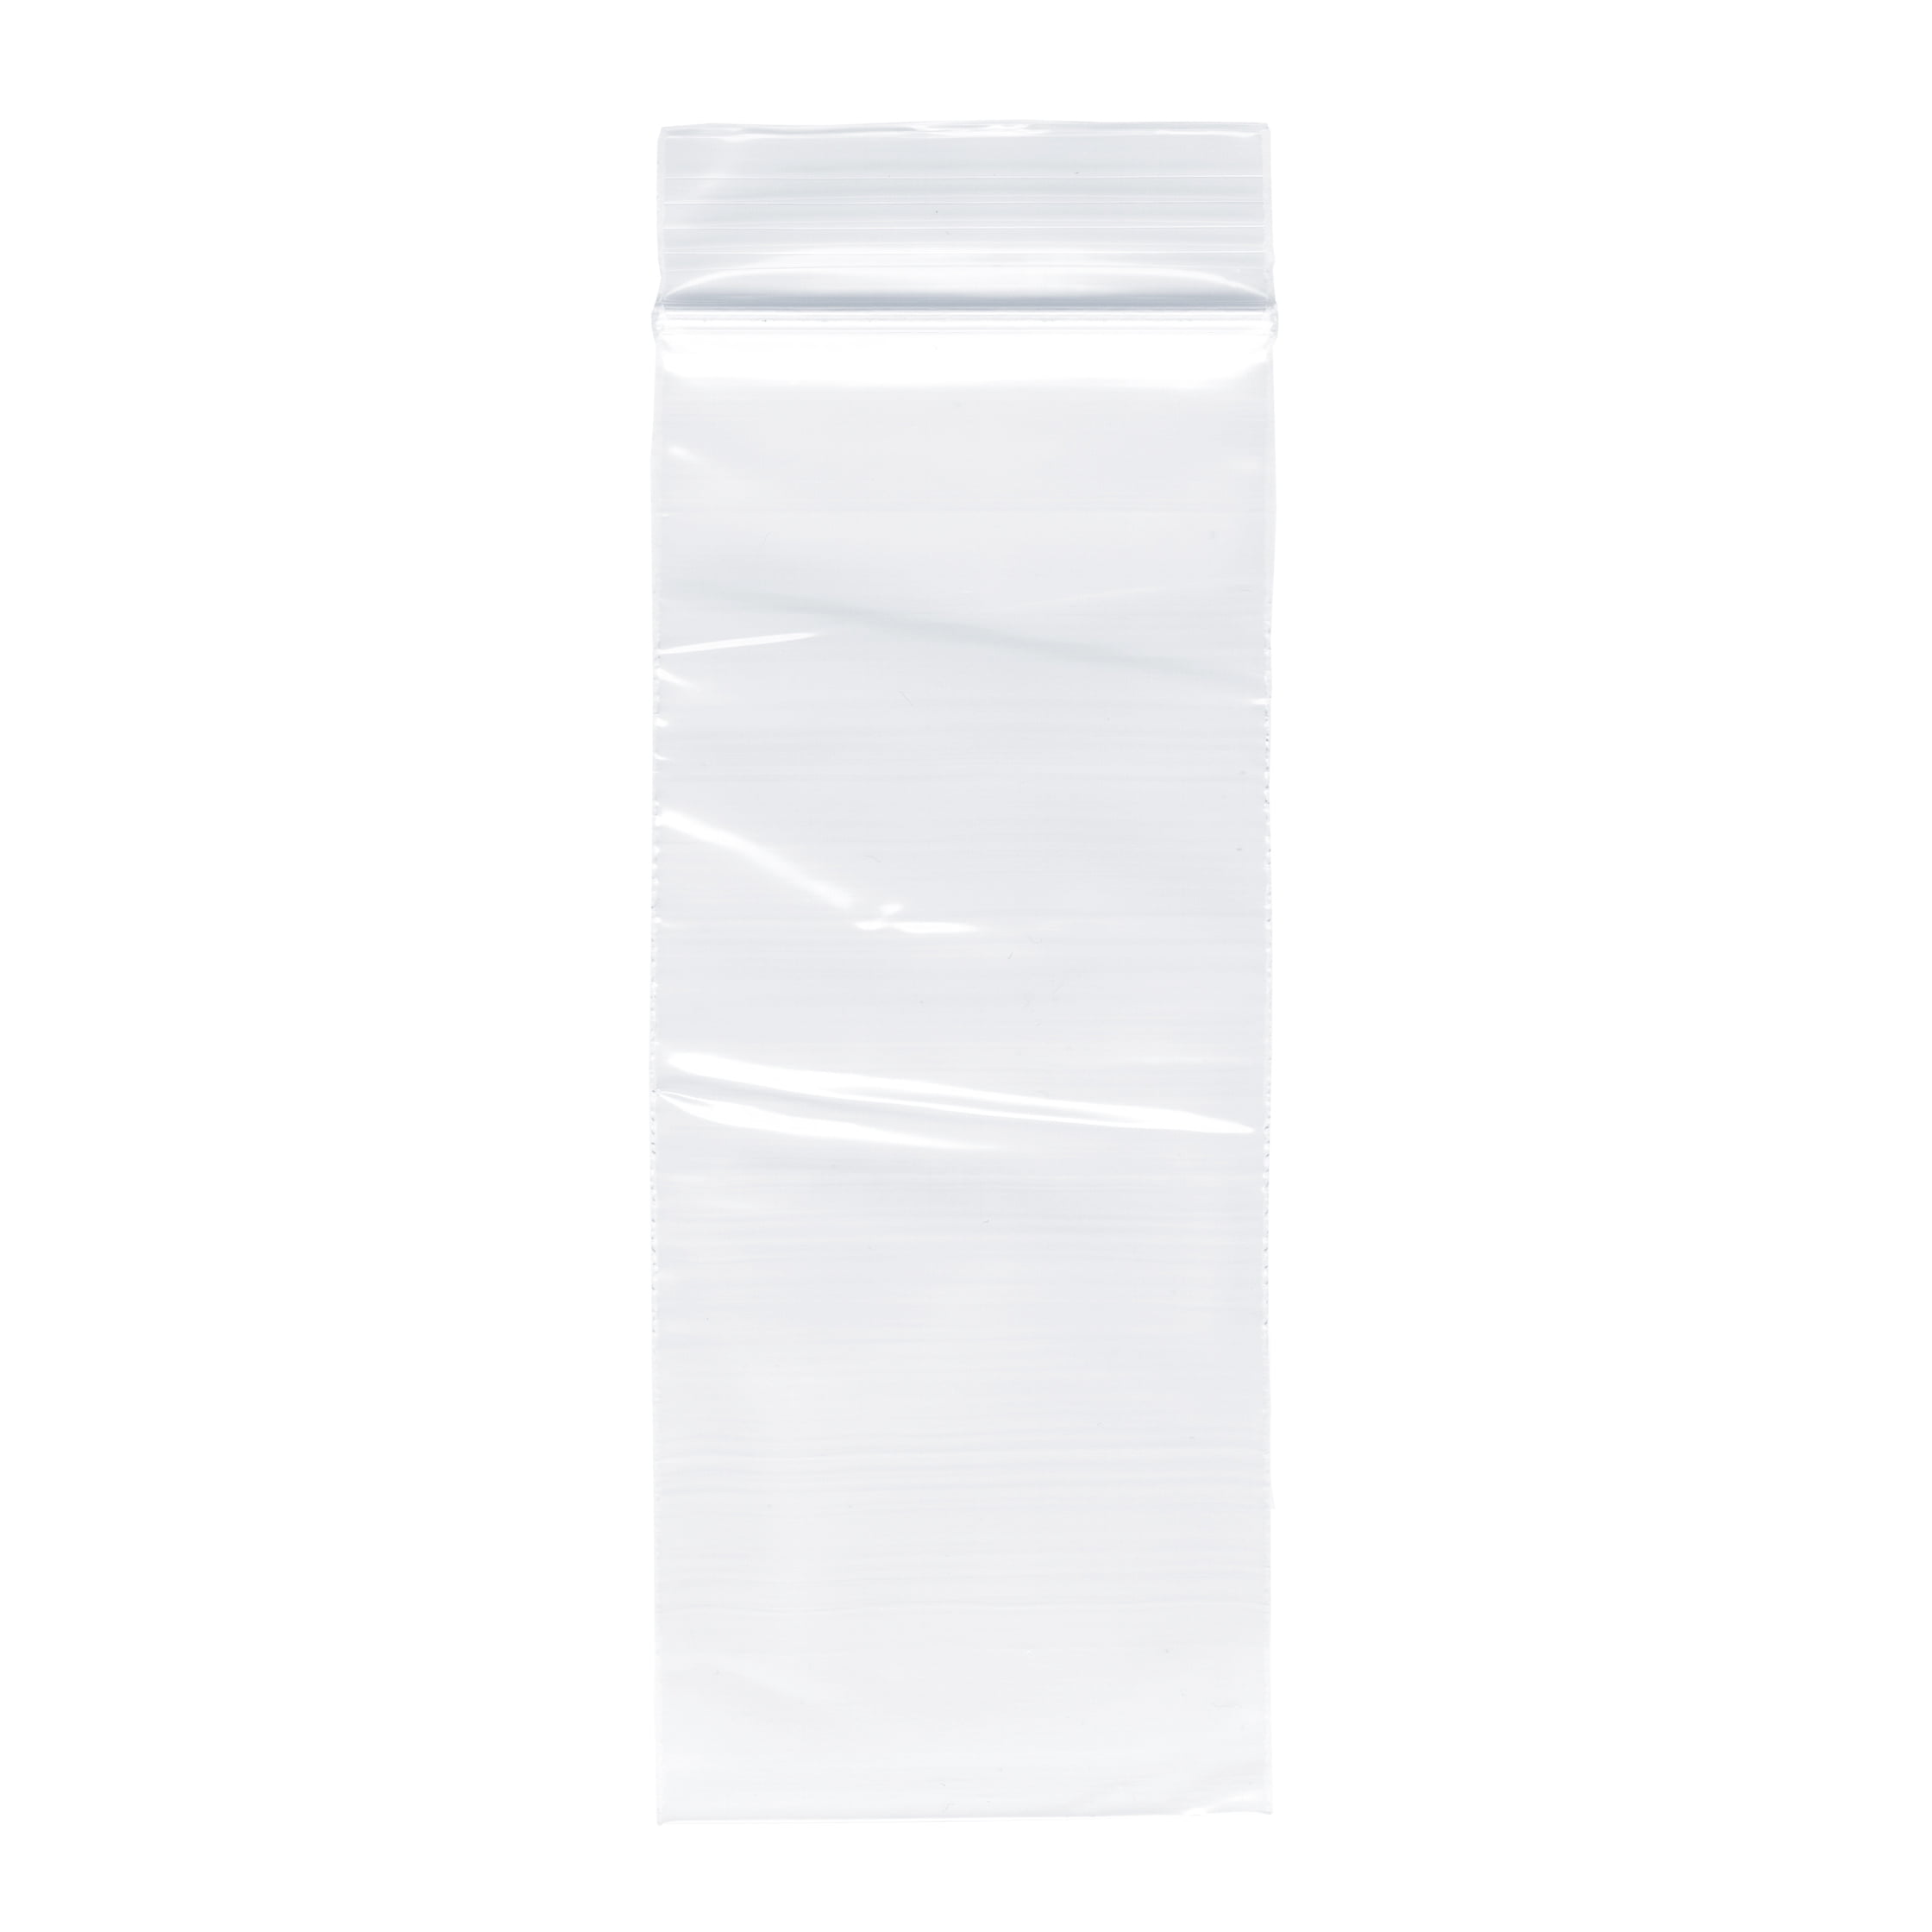 Plymor 3 x 5 Zipper Reclosable Plastic Bags Pack of 200 2 Mil 